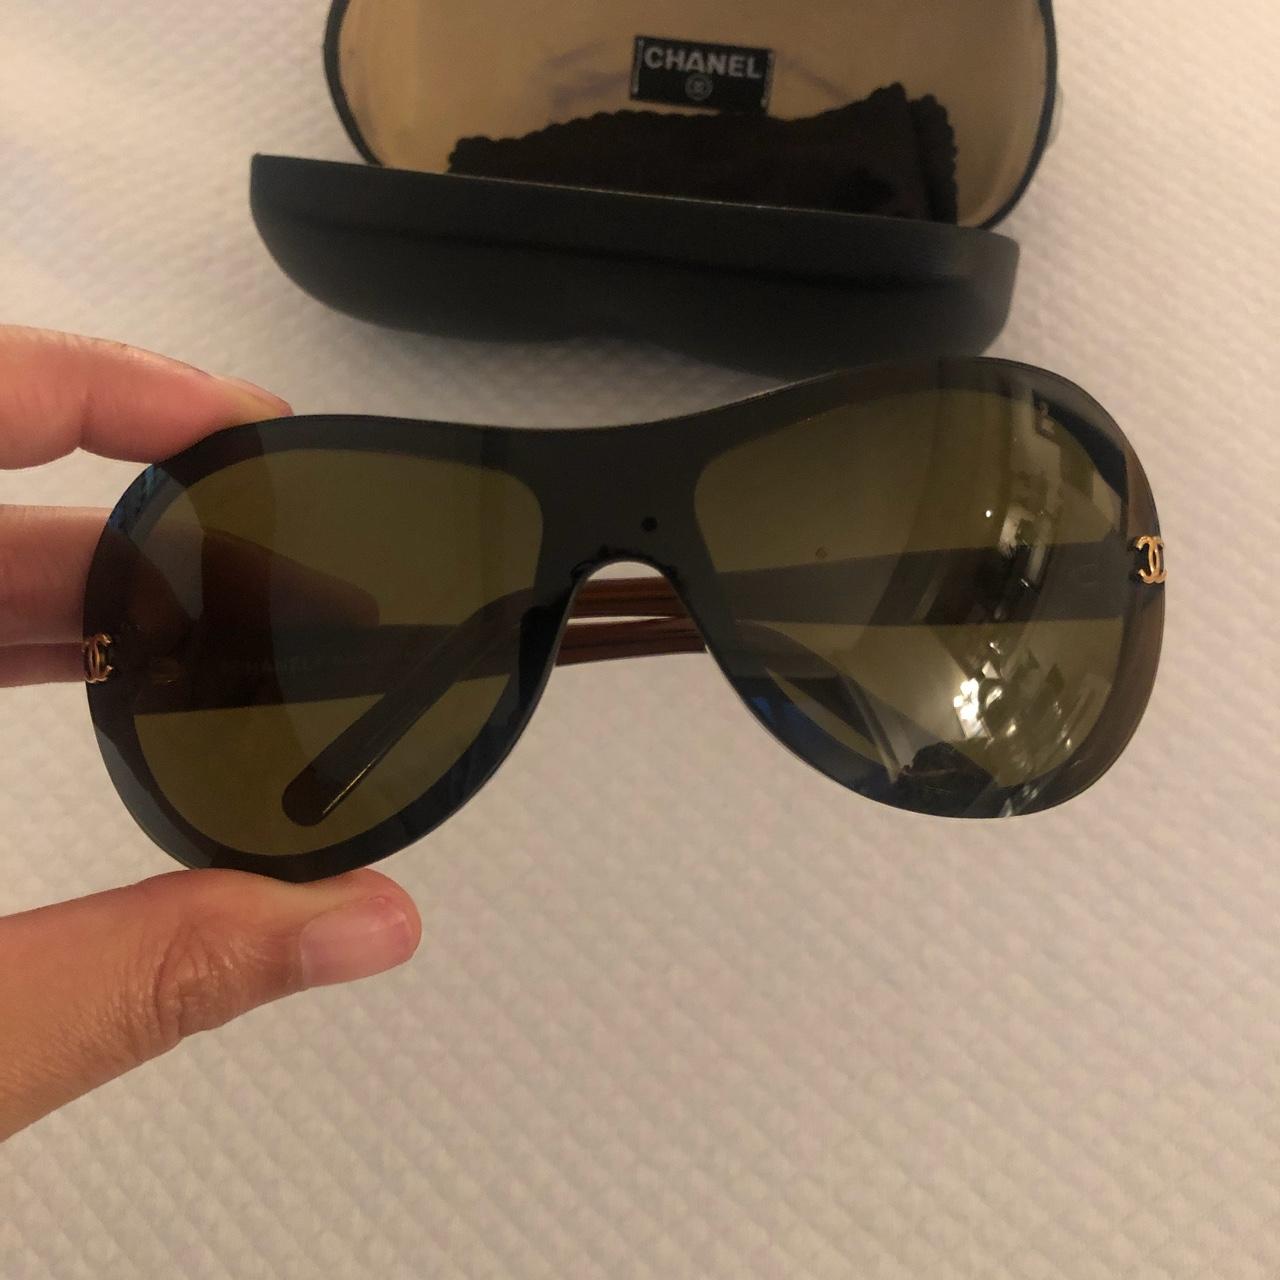 Chanel 5066 vintage sunglasses. Perfect condition.